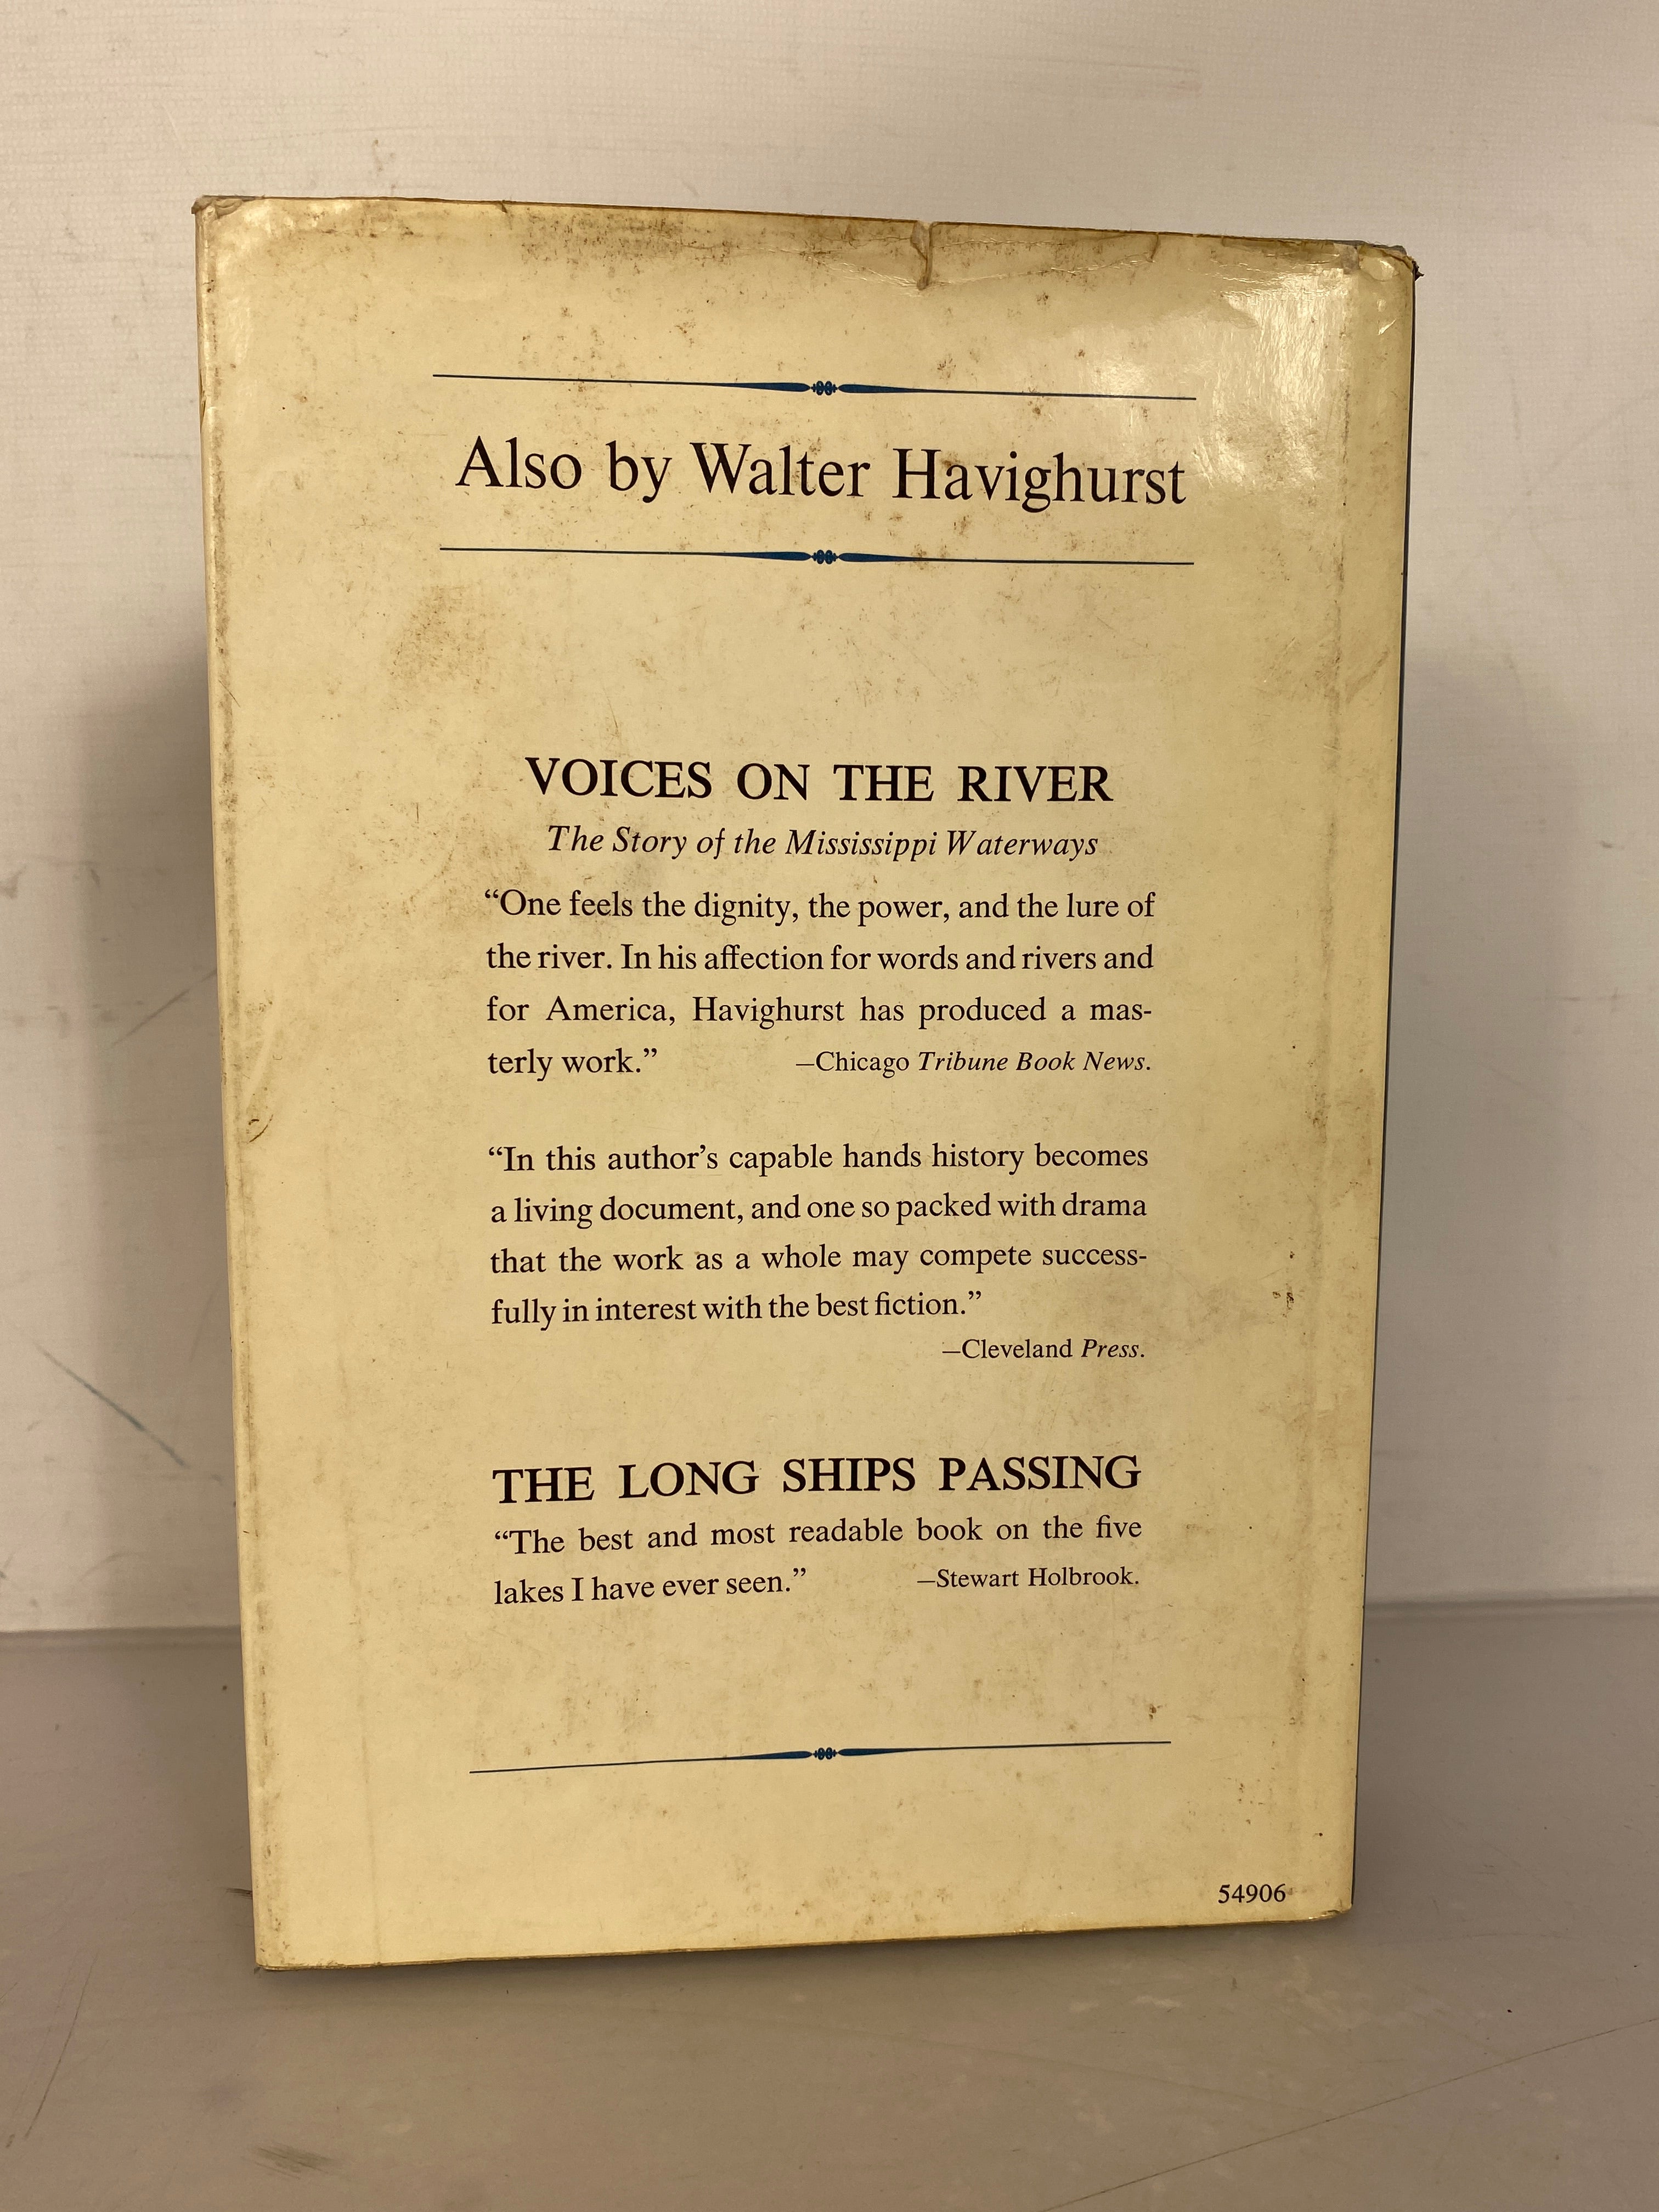 The Great Lakes Reader by Walter Havighurst 1967 Third Printing HC DJ